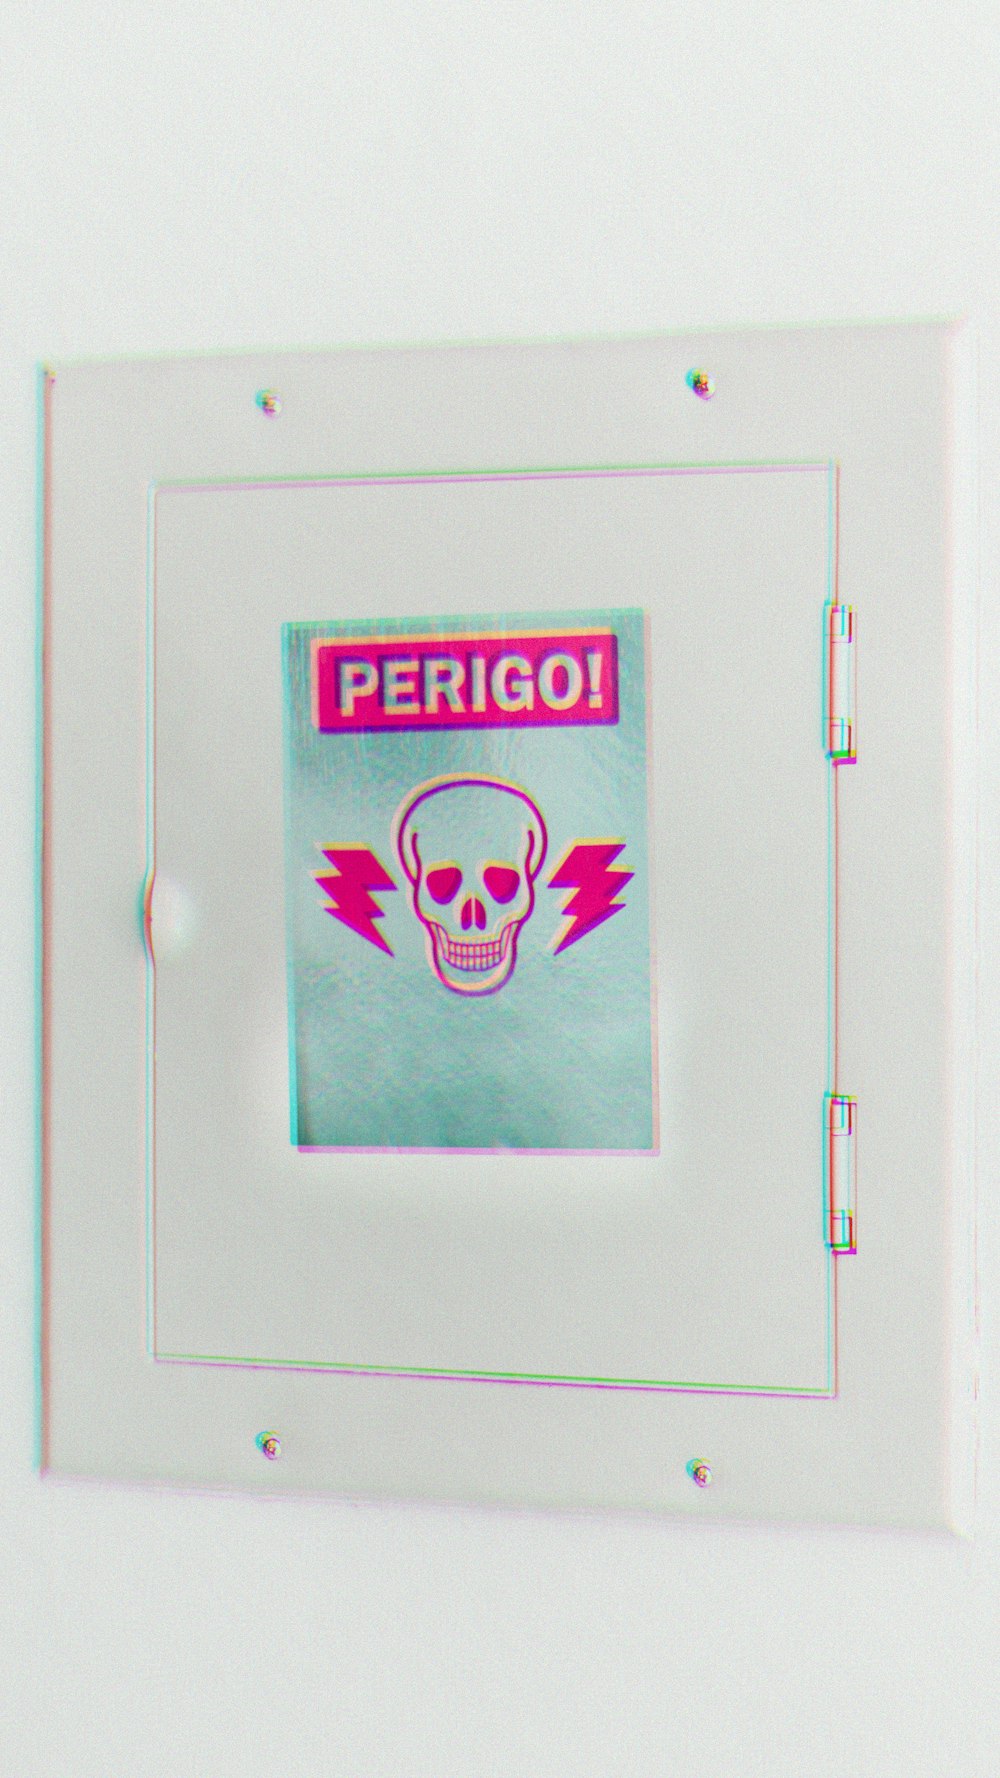 green and pink Perigo! sticker on white electric panel board